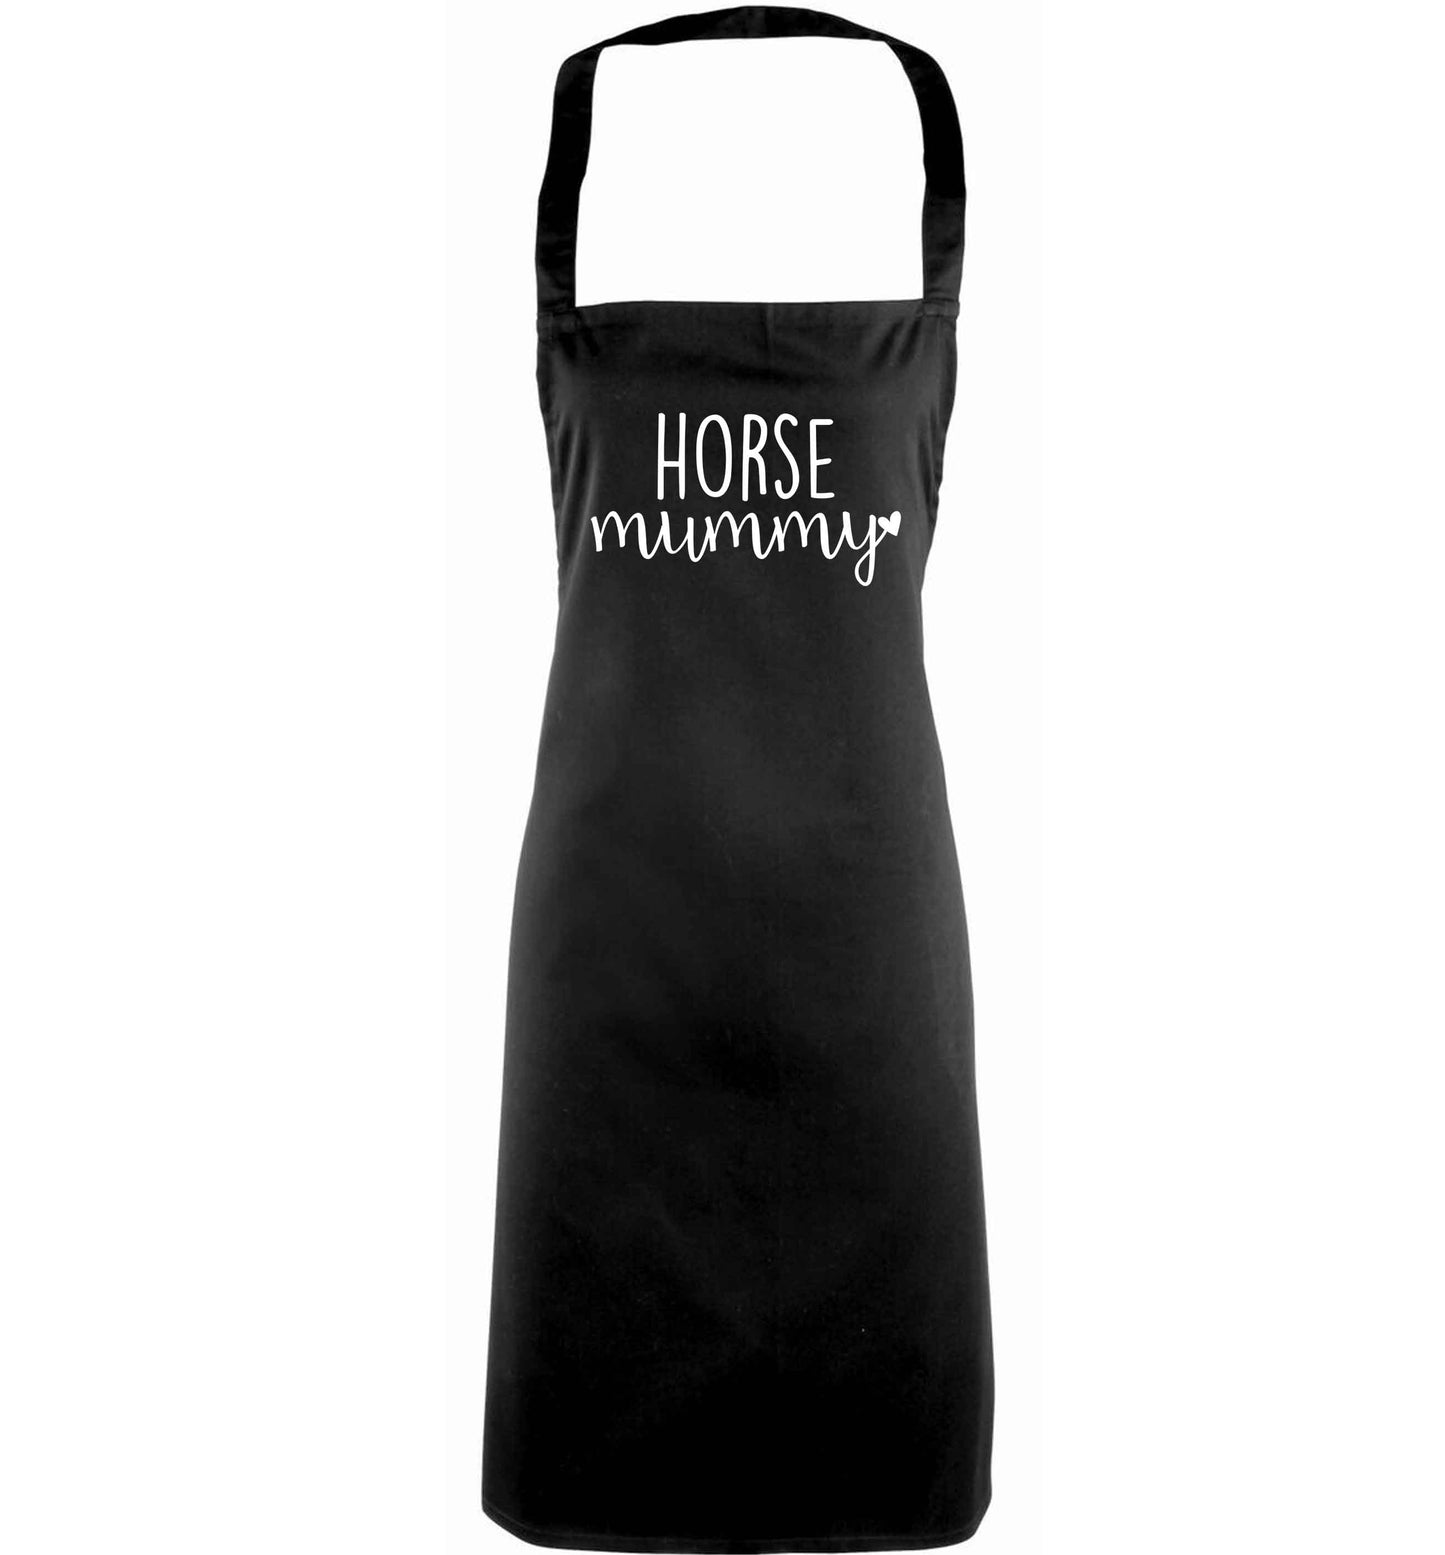 Horse mummy adults black apron